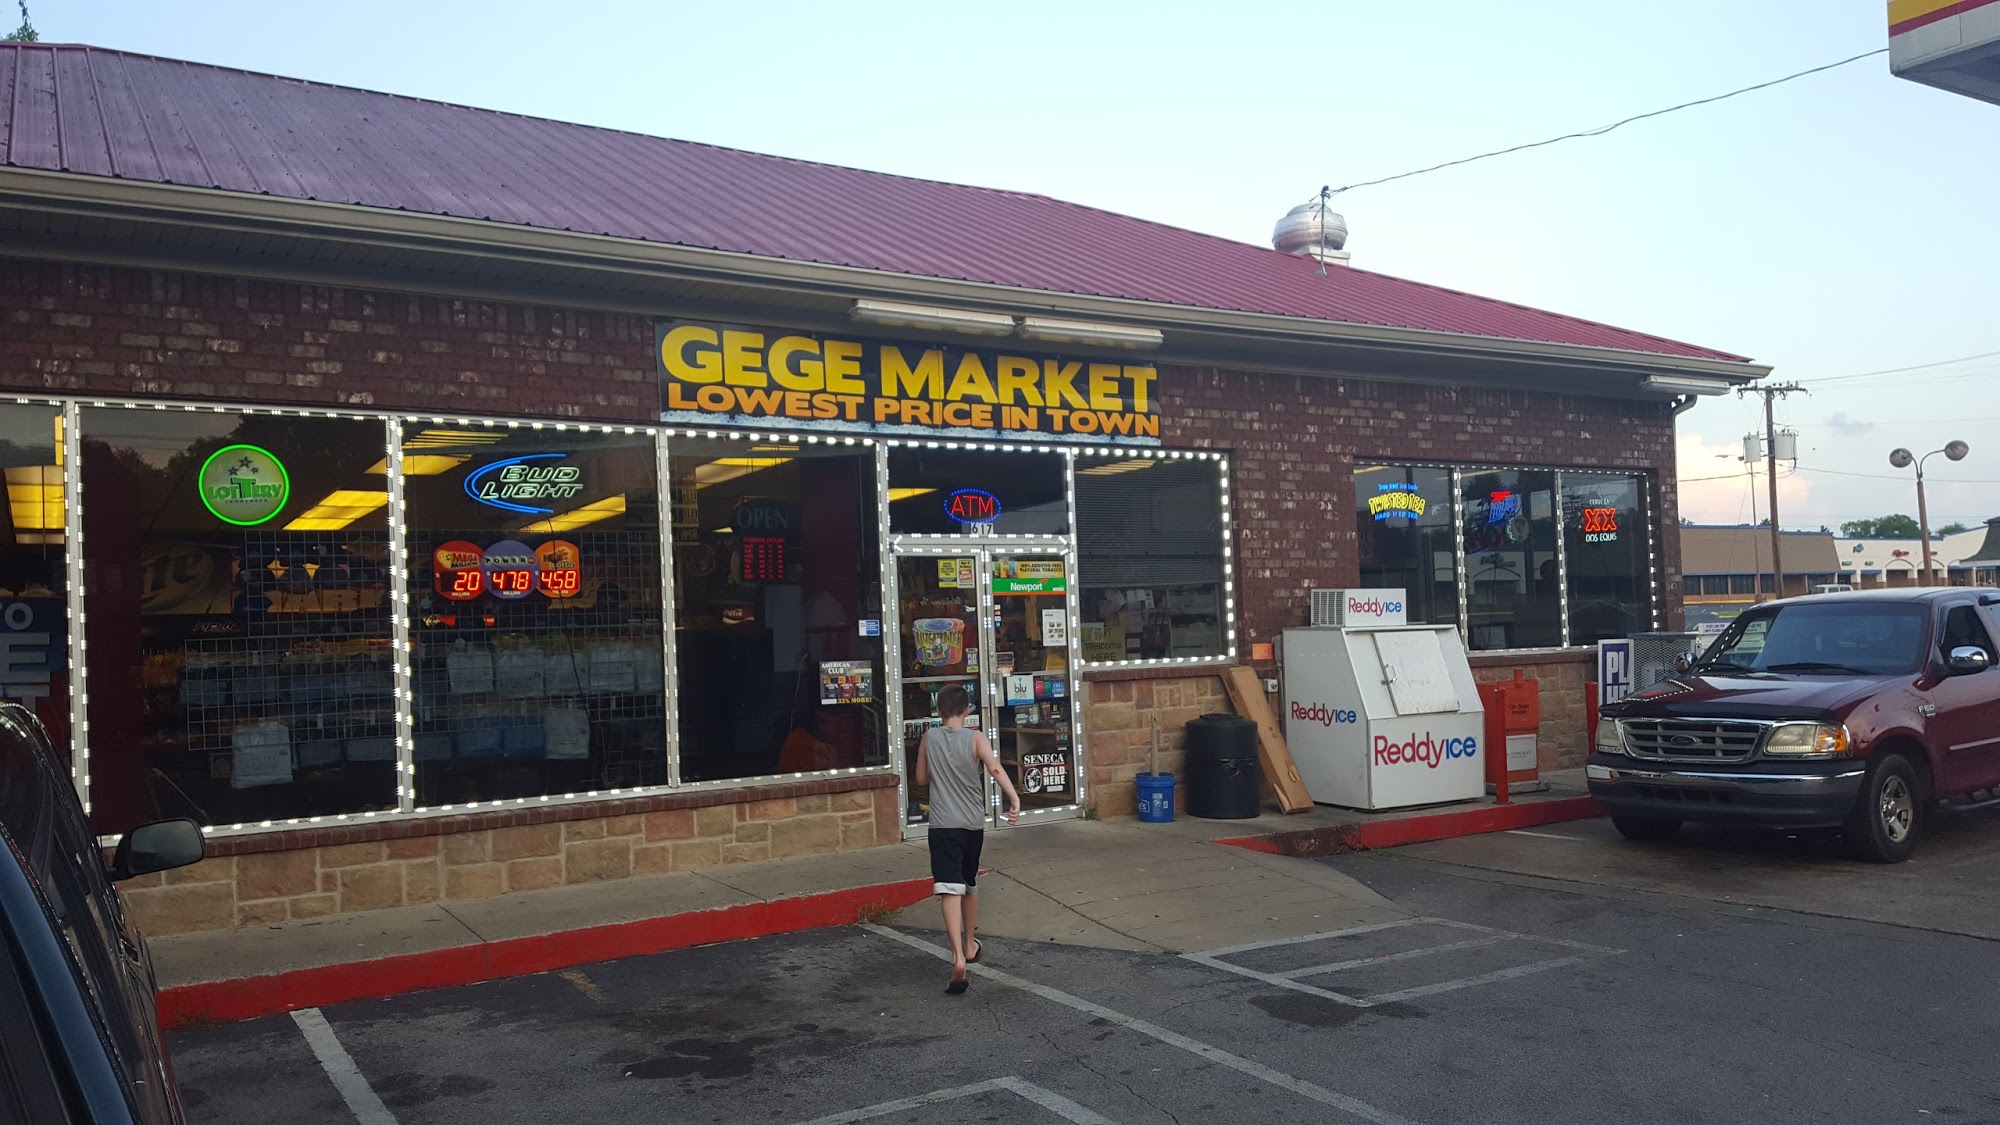 Gege Market